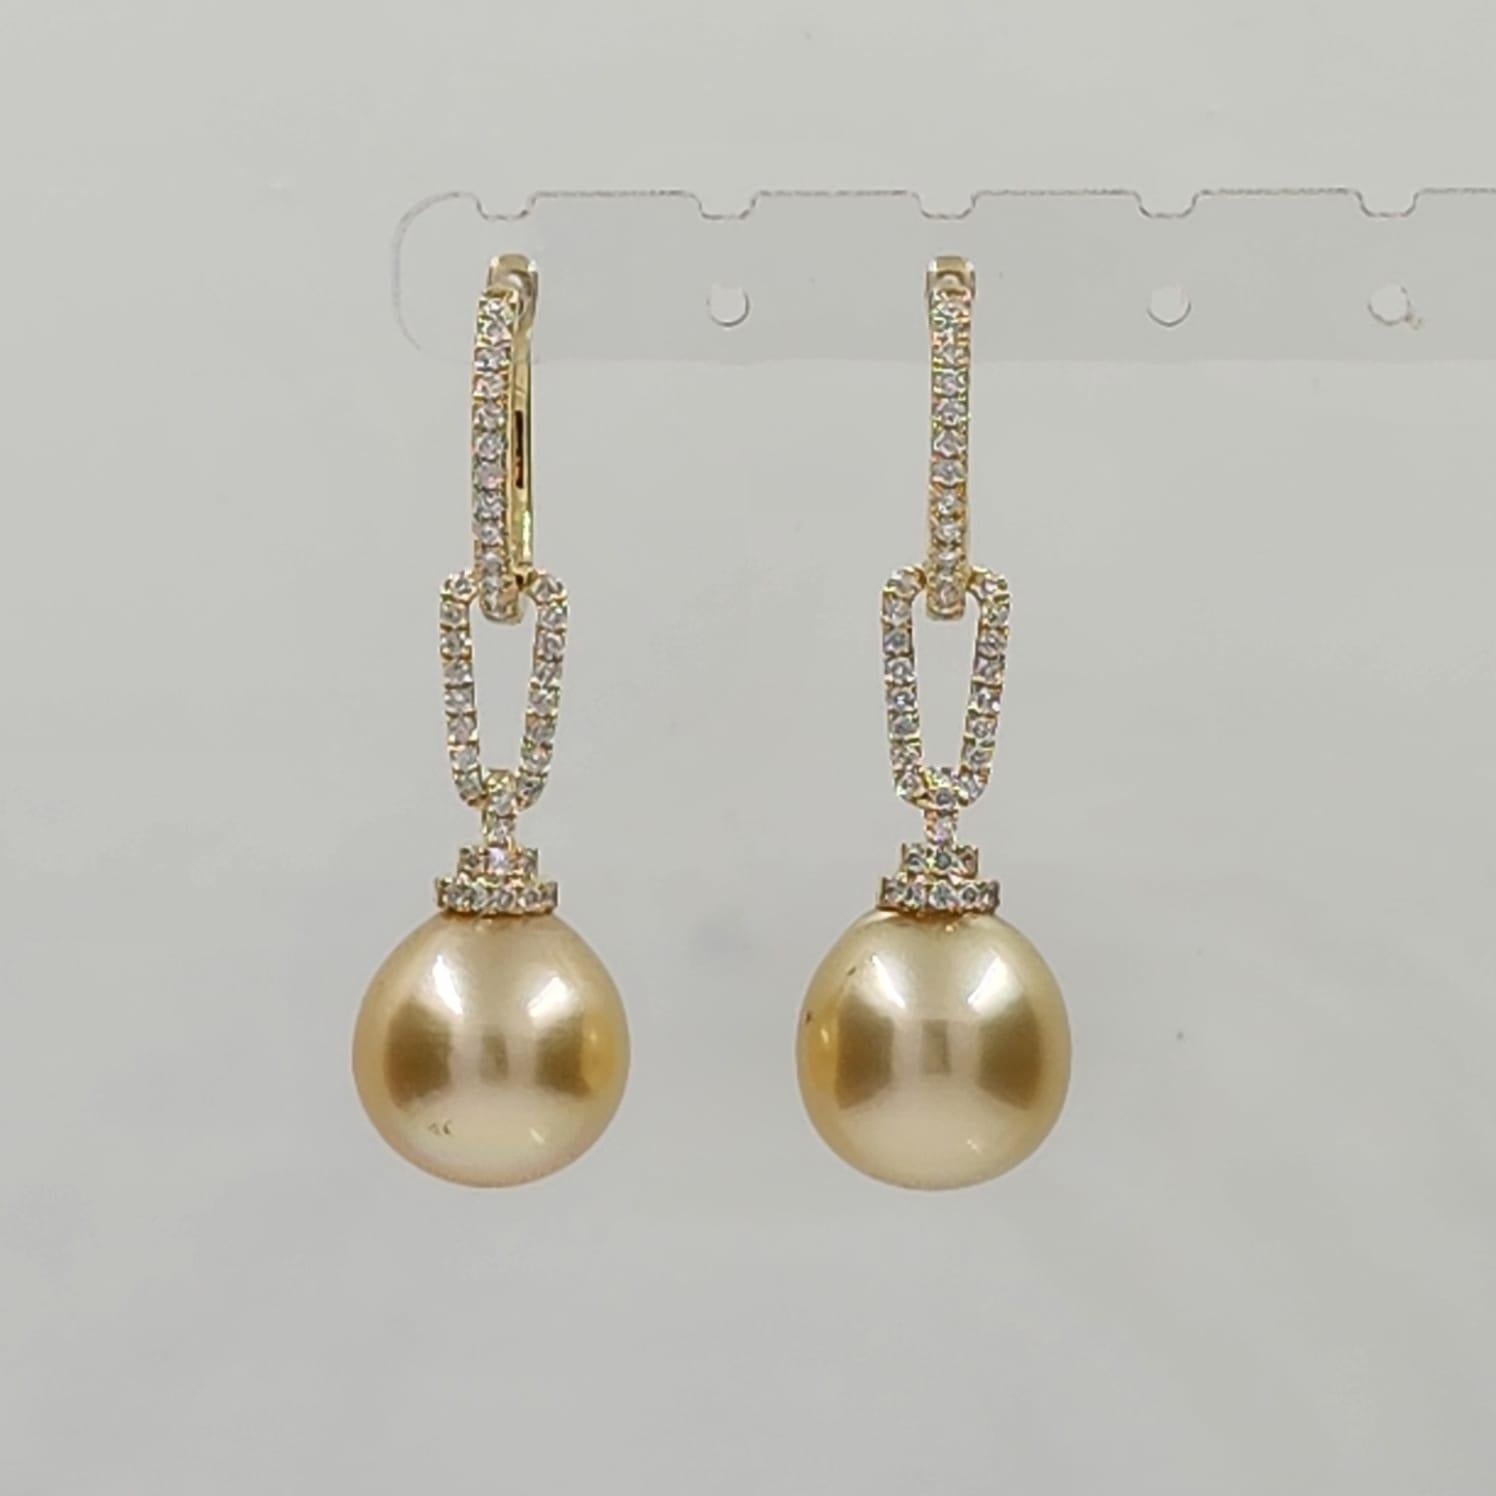 12.5 x 15mm Oval South Sea Pearl Diamond Dangle Earrings in 14 Karat Yellow Gold For Sale 1